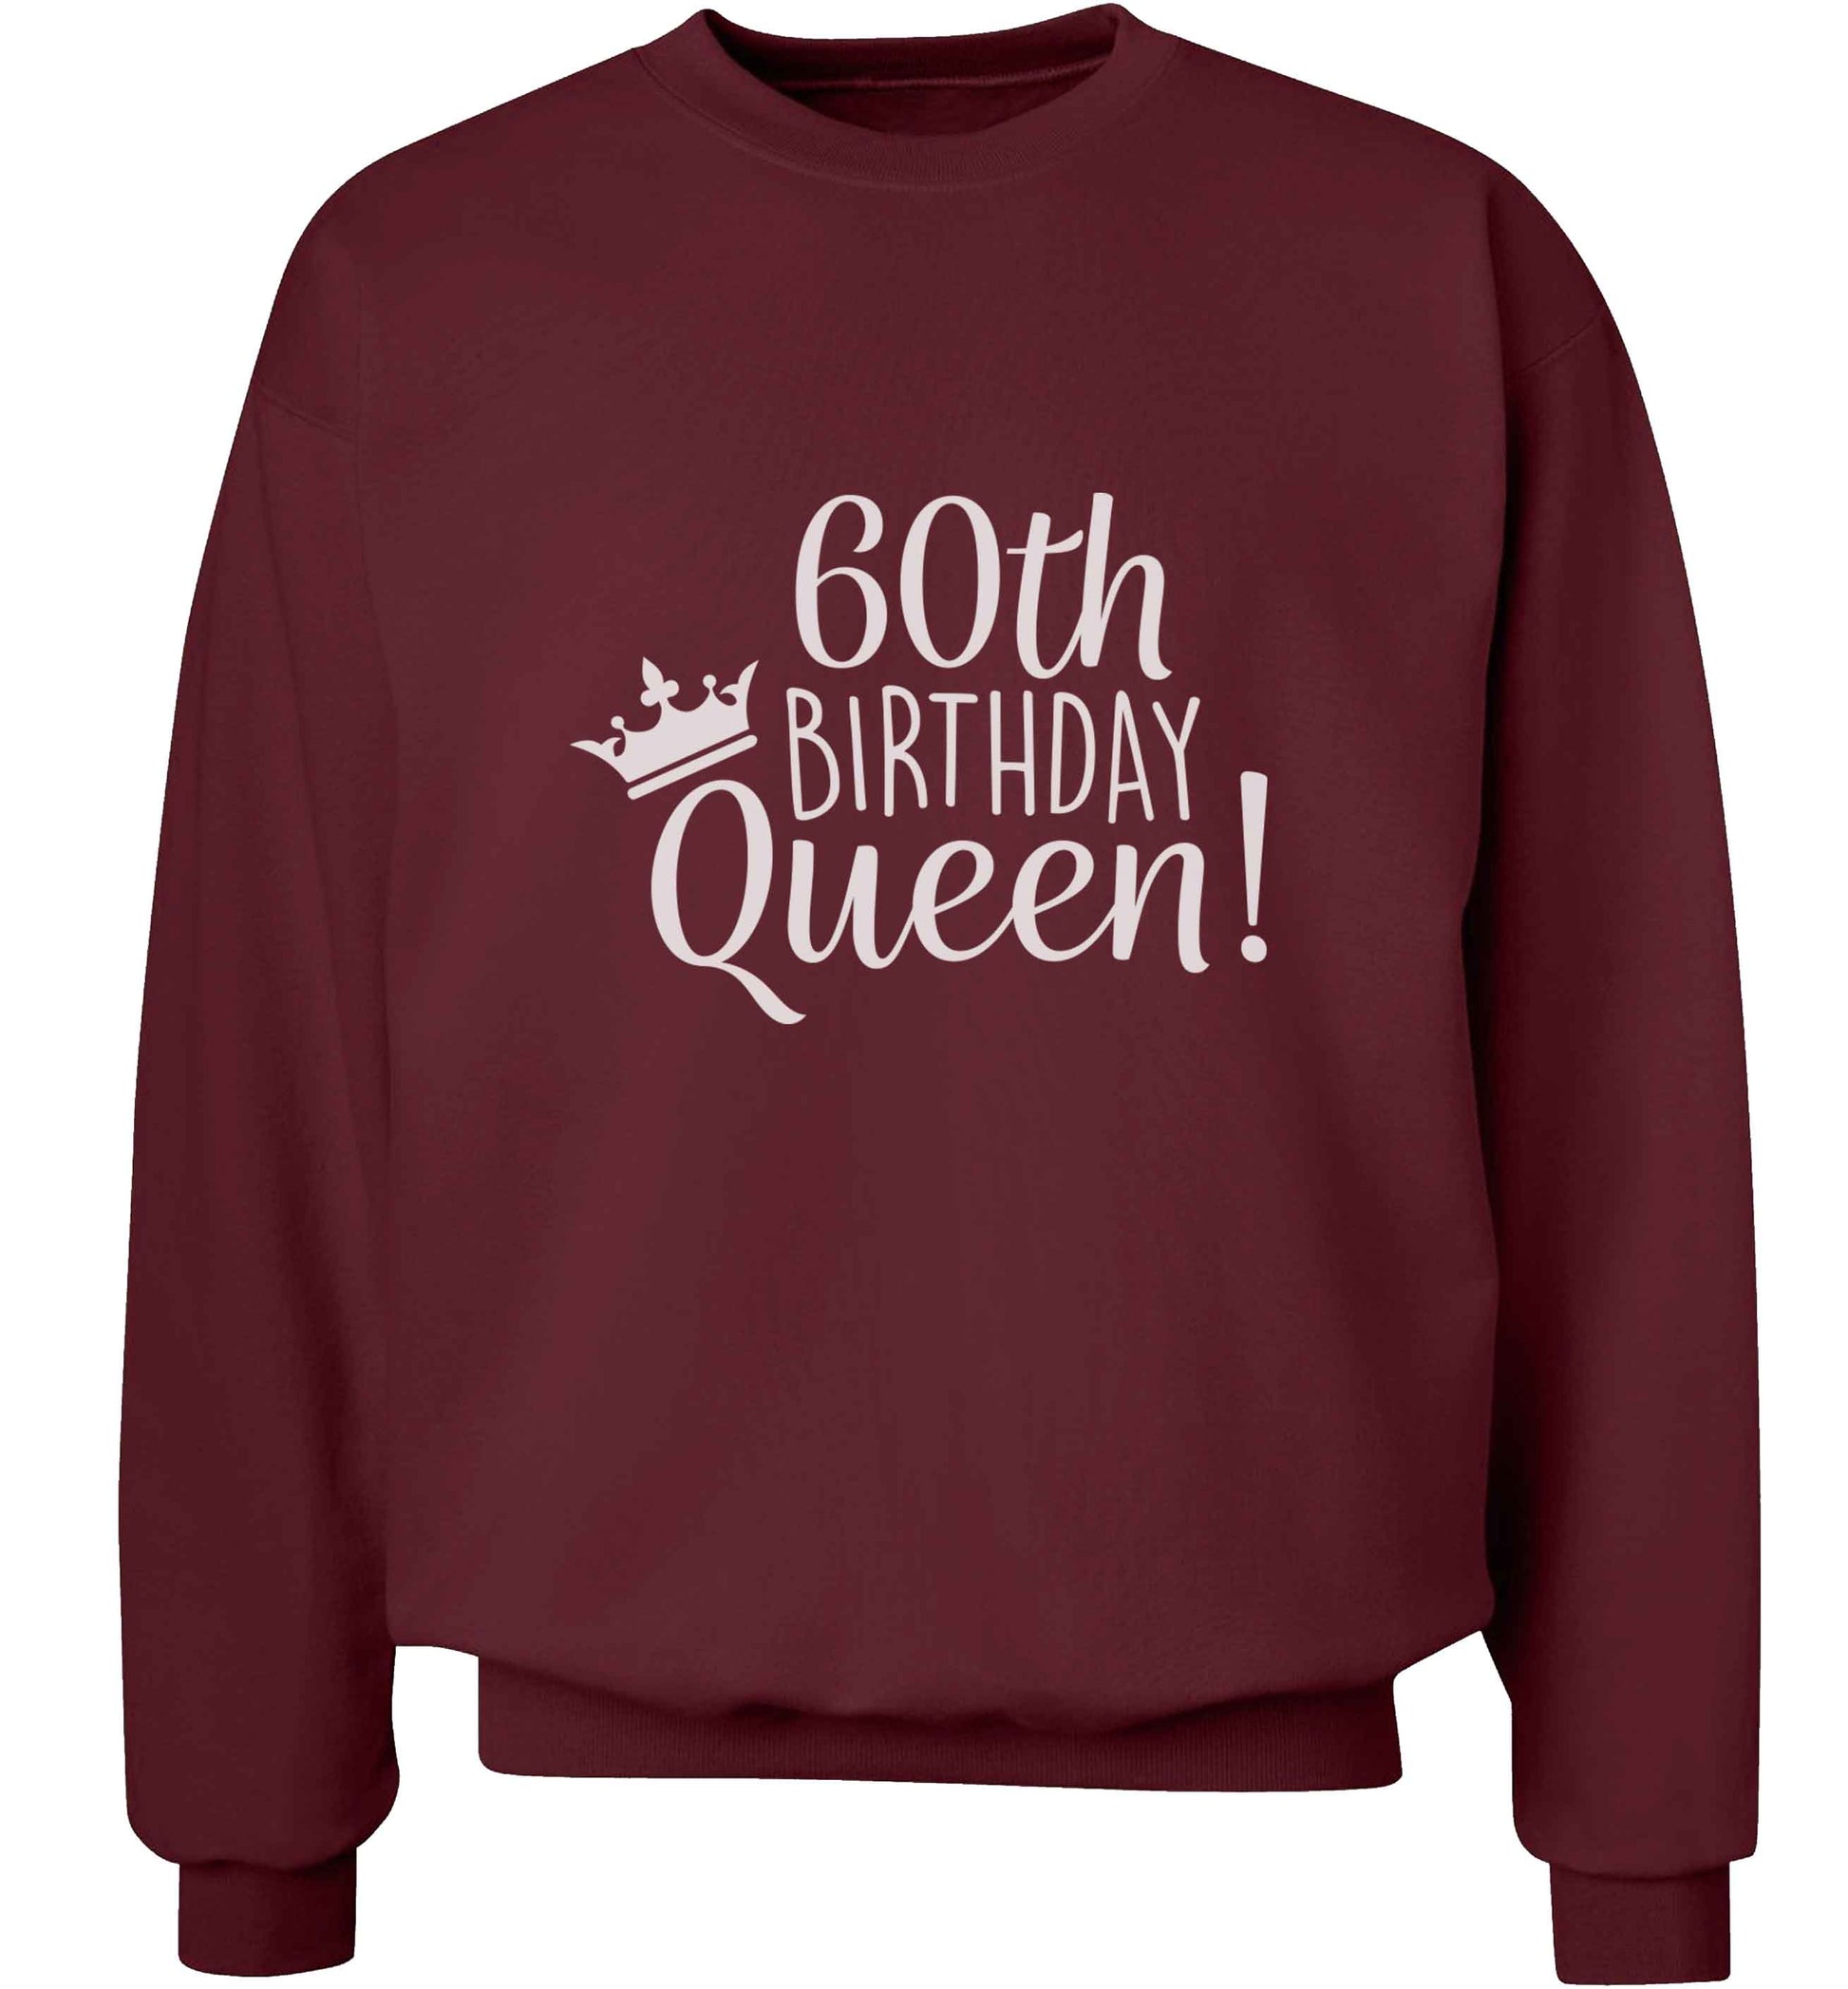 60th birthday Queen adult's unisex maroon sweater 2XL